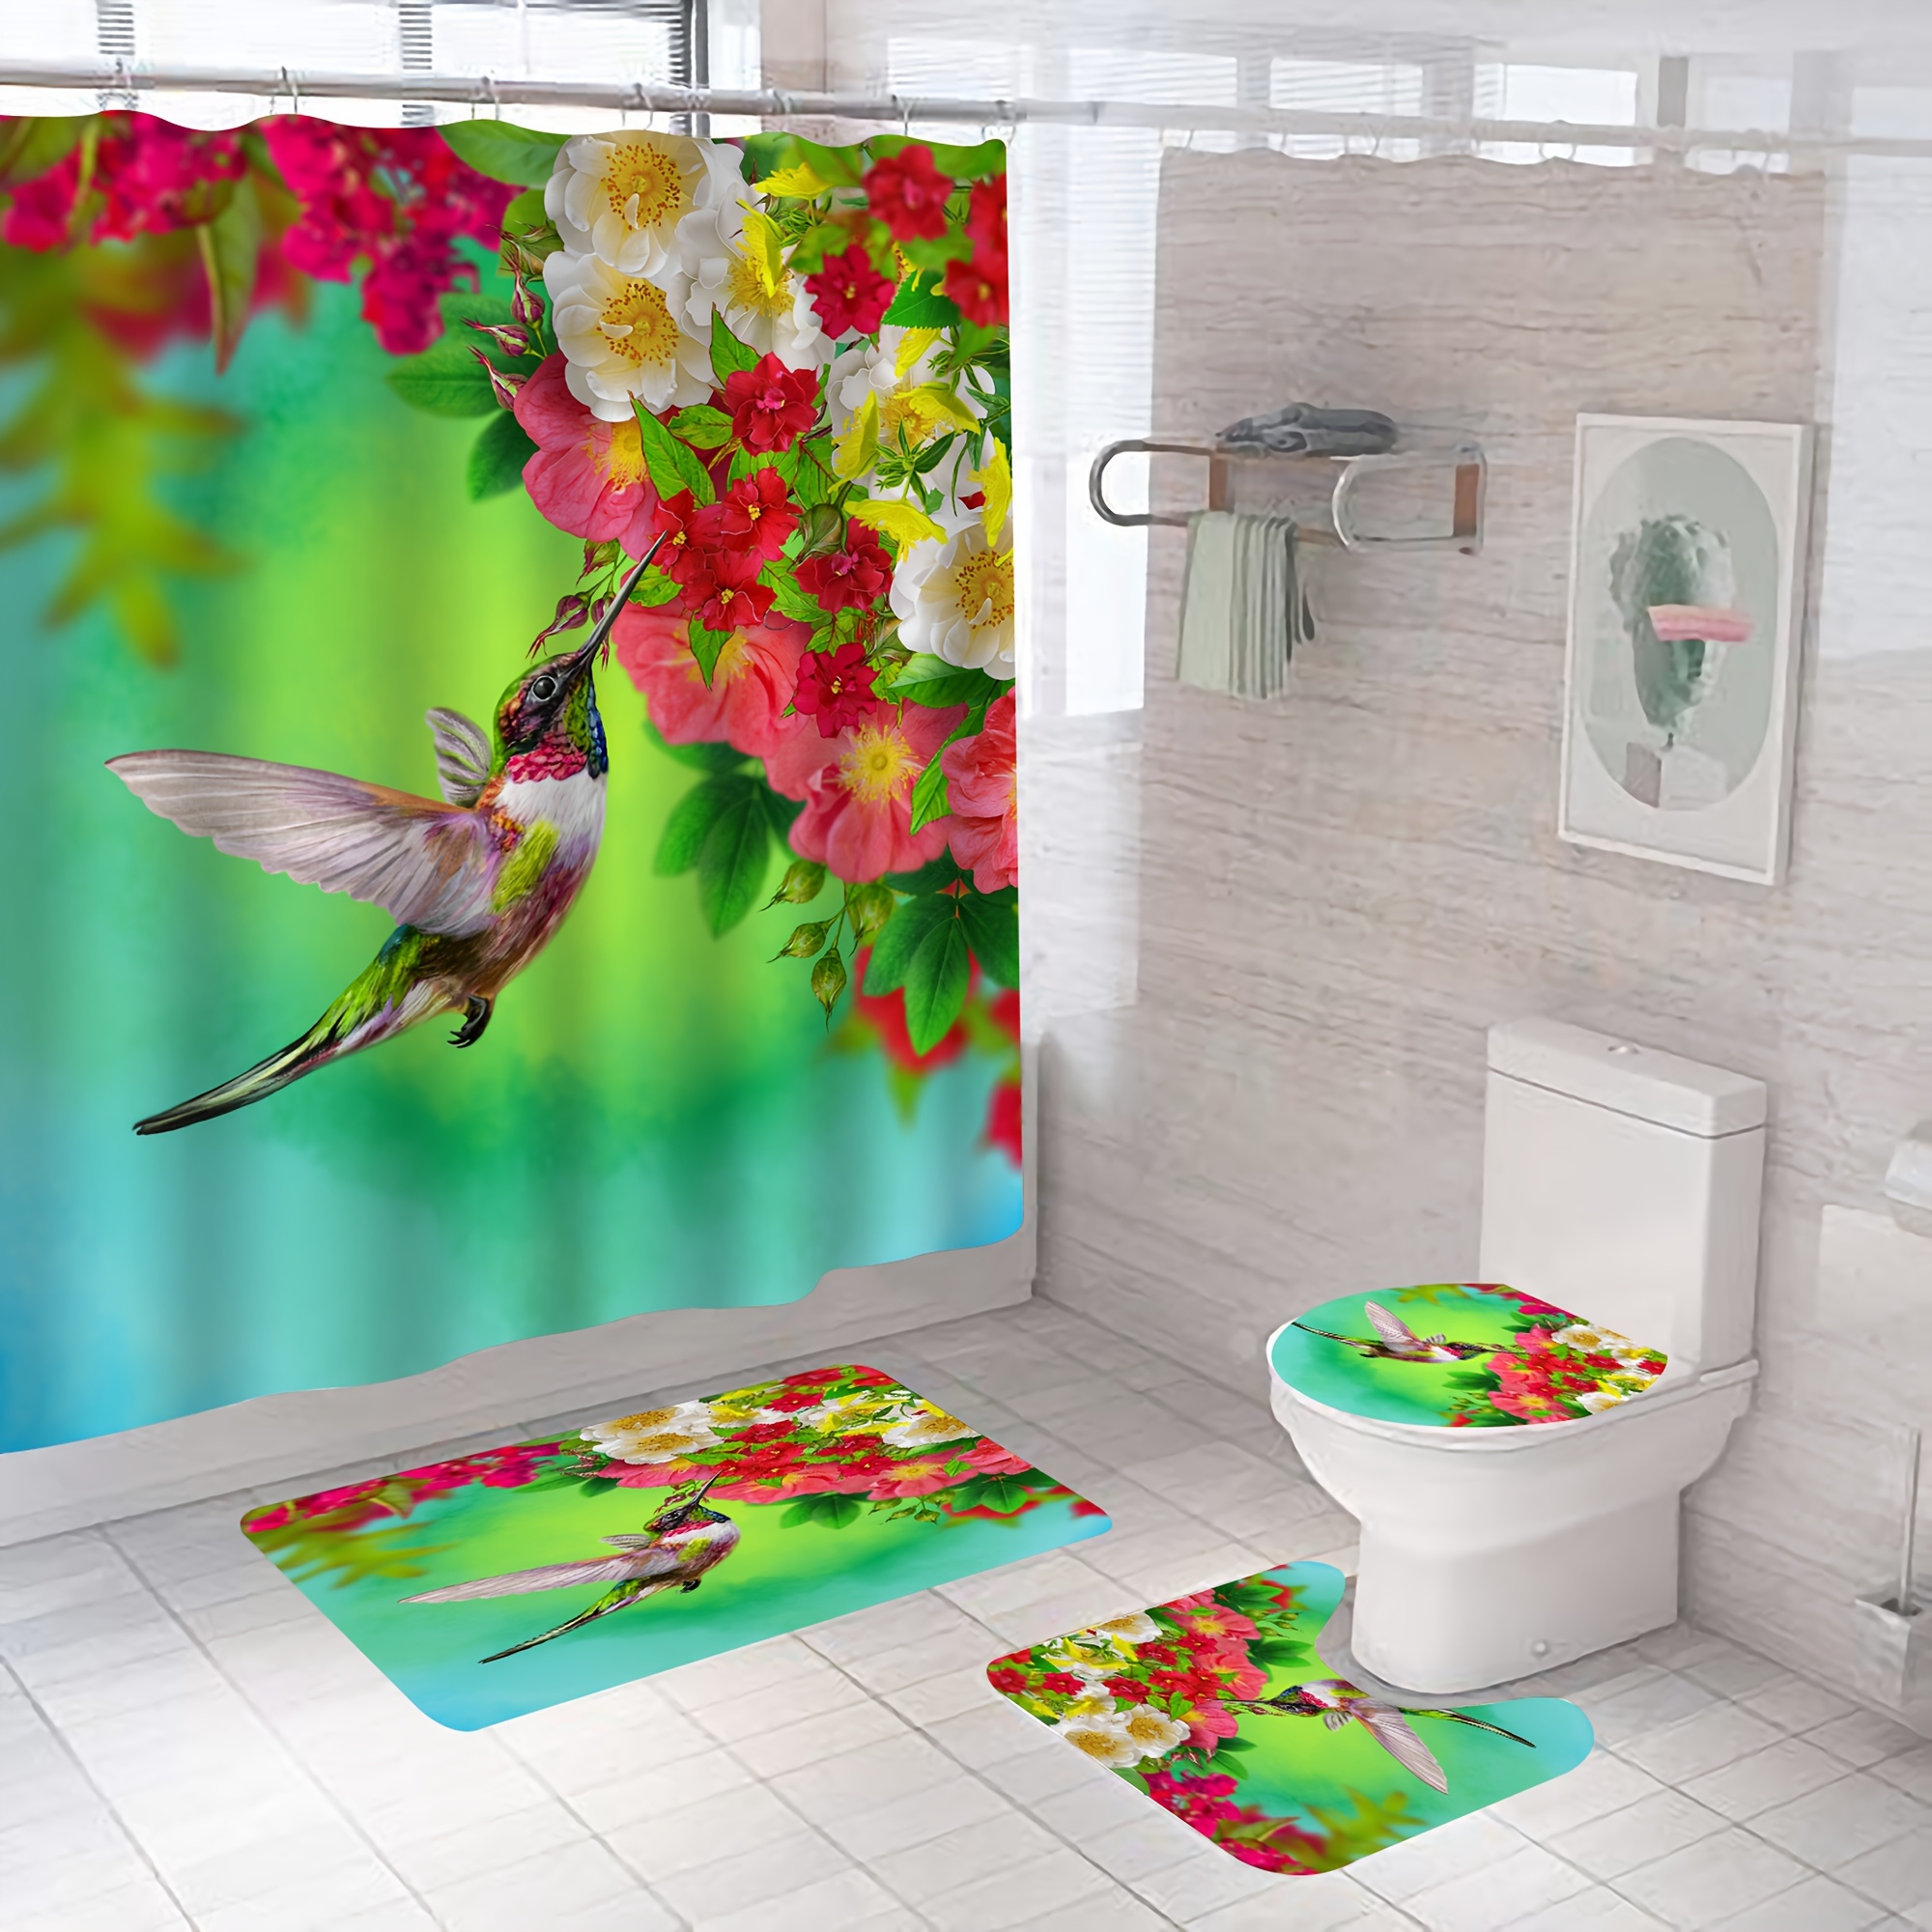 Crane Shower Curtain Set With 12 Hooks Fabric Waterproof Shower Curtain  Birds Shower Curtain Pink Background for Bathroom Decor 